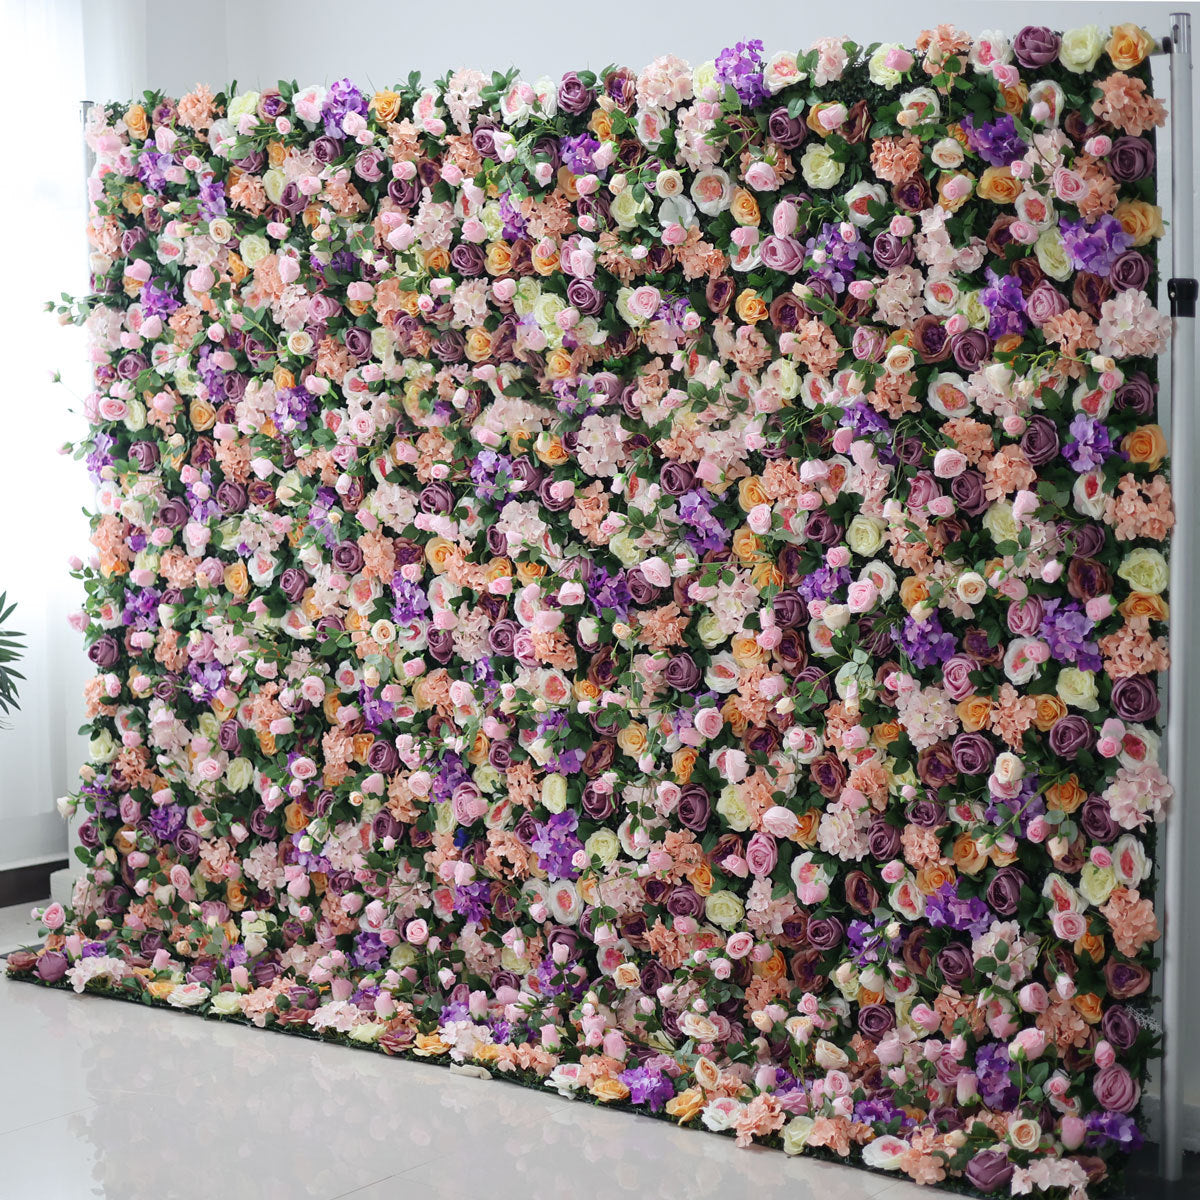 3D Artificial Flower Wall Arrangement Wedding Party Birthday Backdrop Decor HQ1190